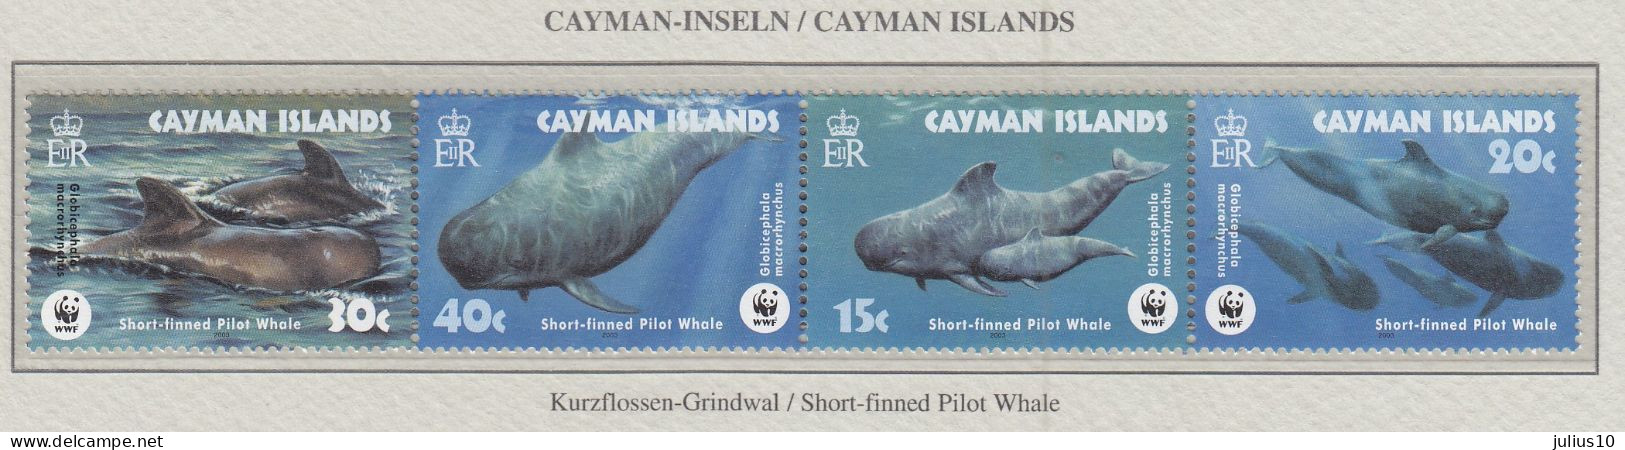 CAYMAN ISLANDS 2003 WWF Whales Mi 970-973 MNH Fauna 669 - Whales